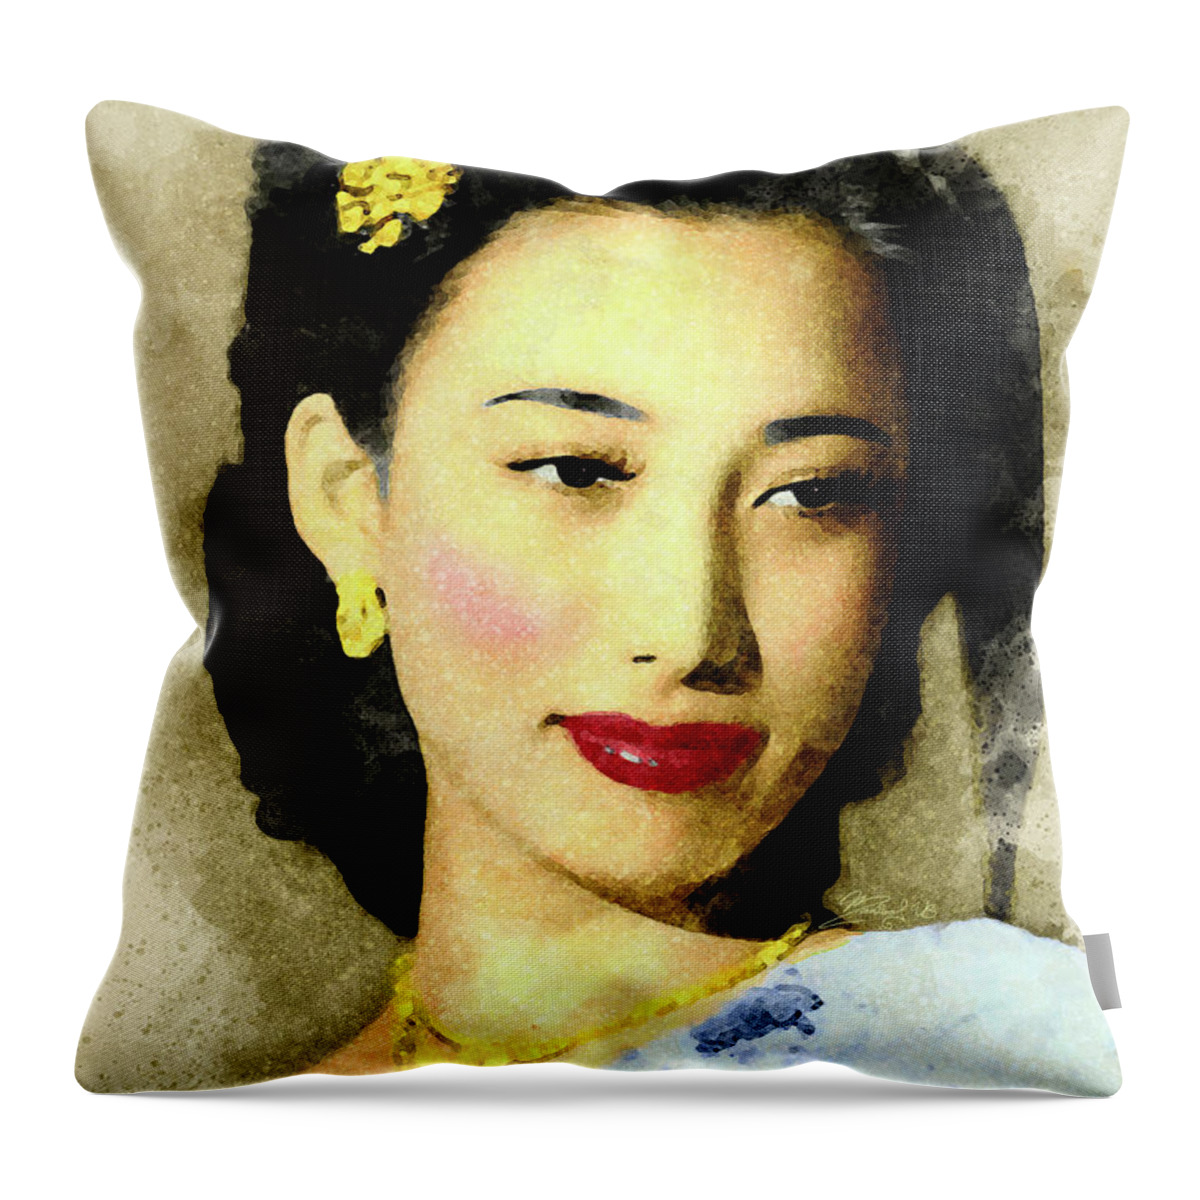 China Throw Pillow featuring the digital art Shangguan Yunzhu by Marisol VB